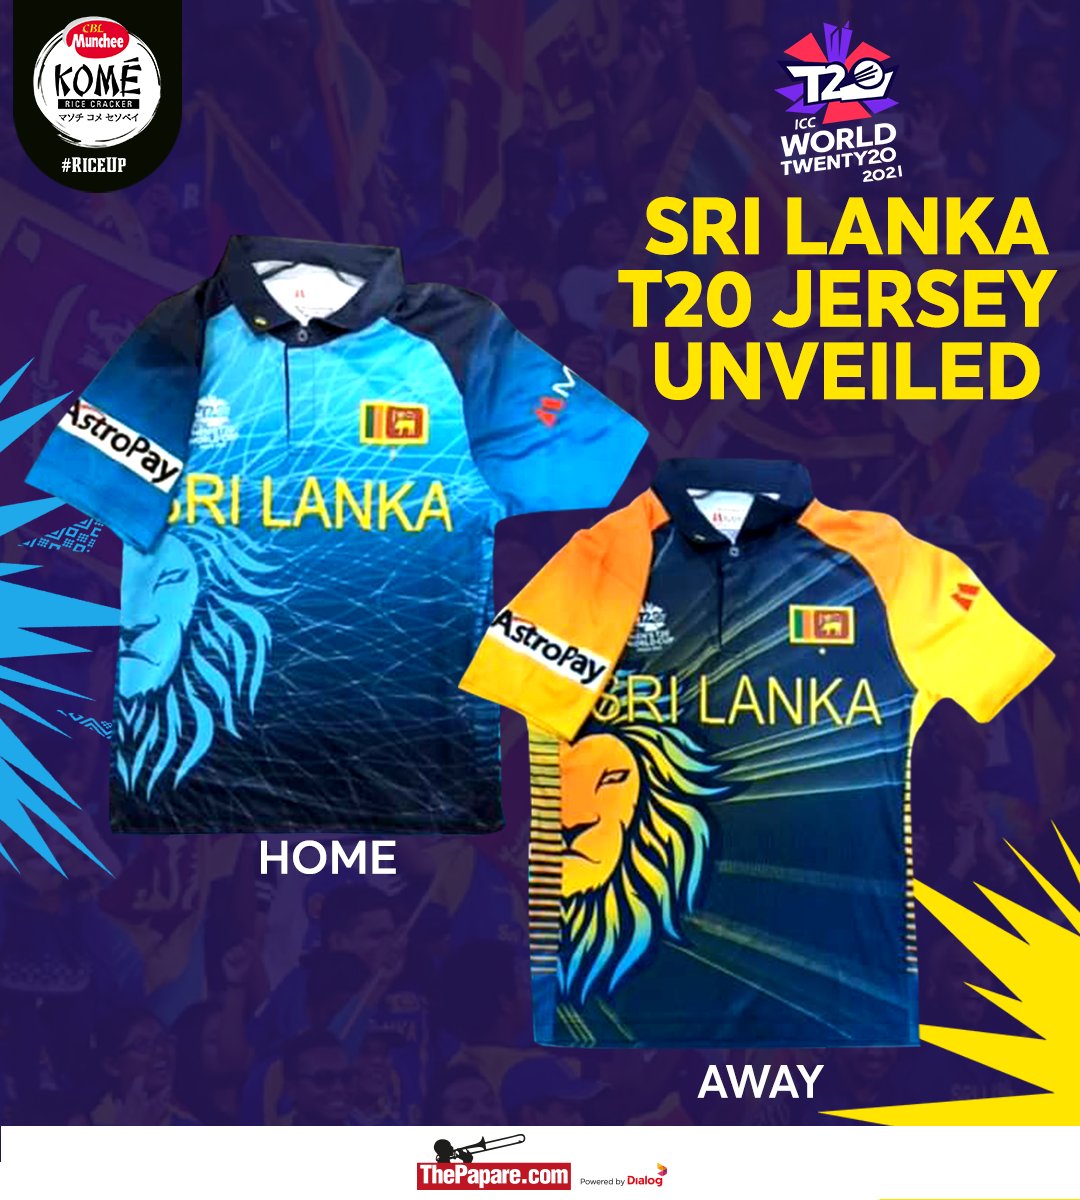 ThePapare.com on X: Sri Lanka unveils new T20 jersey ahead of